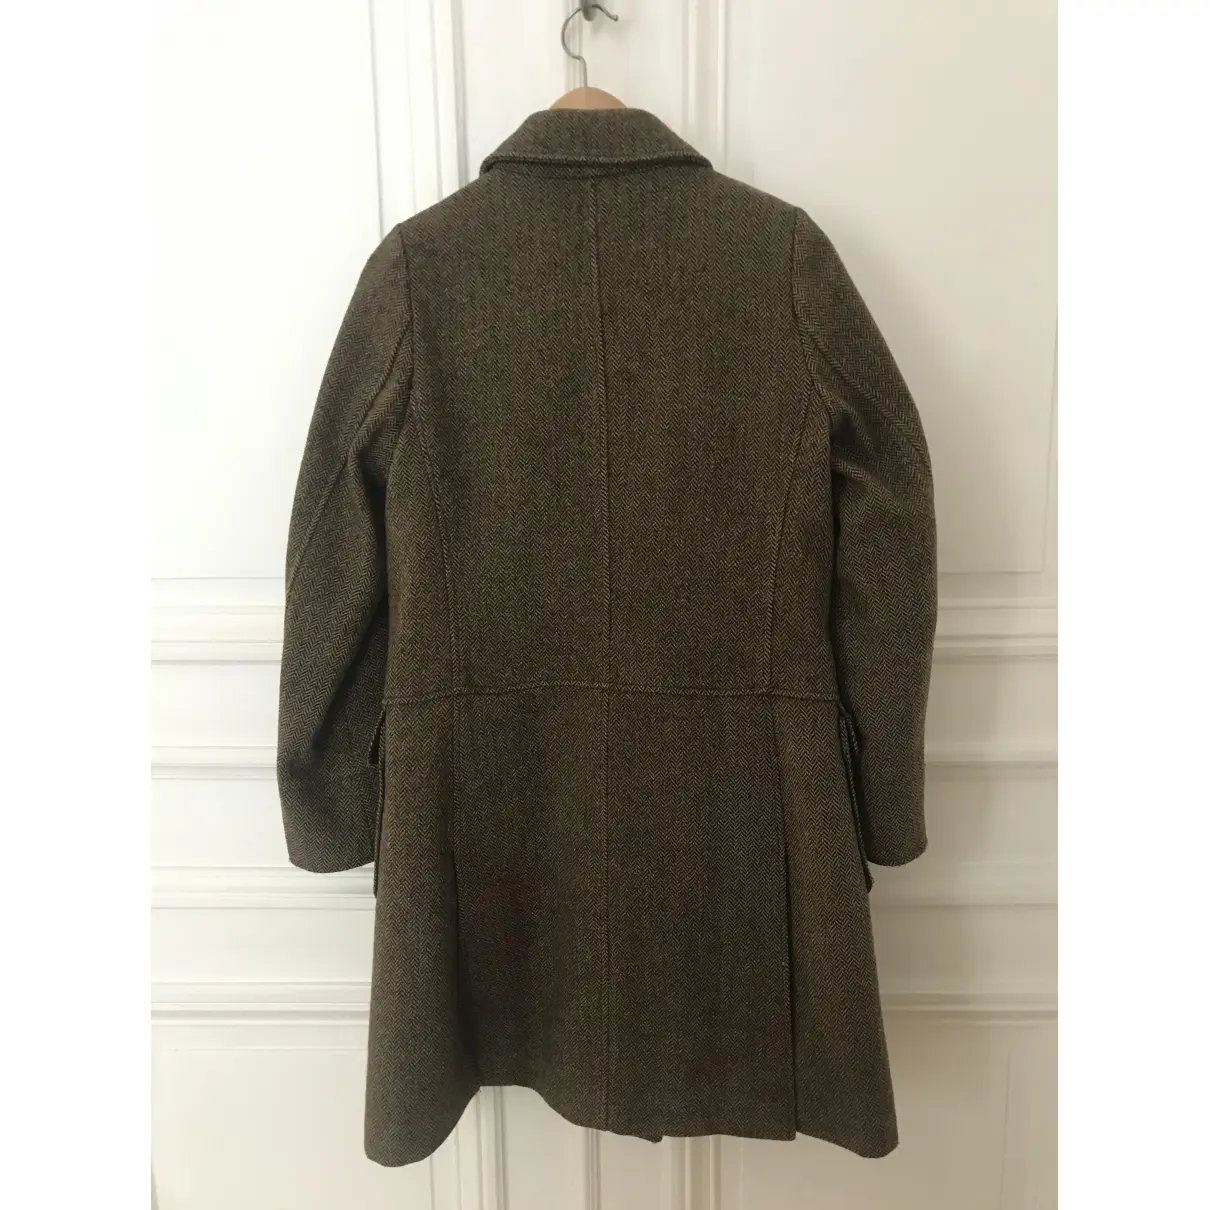 Buy Bonpoint Wool coat online - Vintage